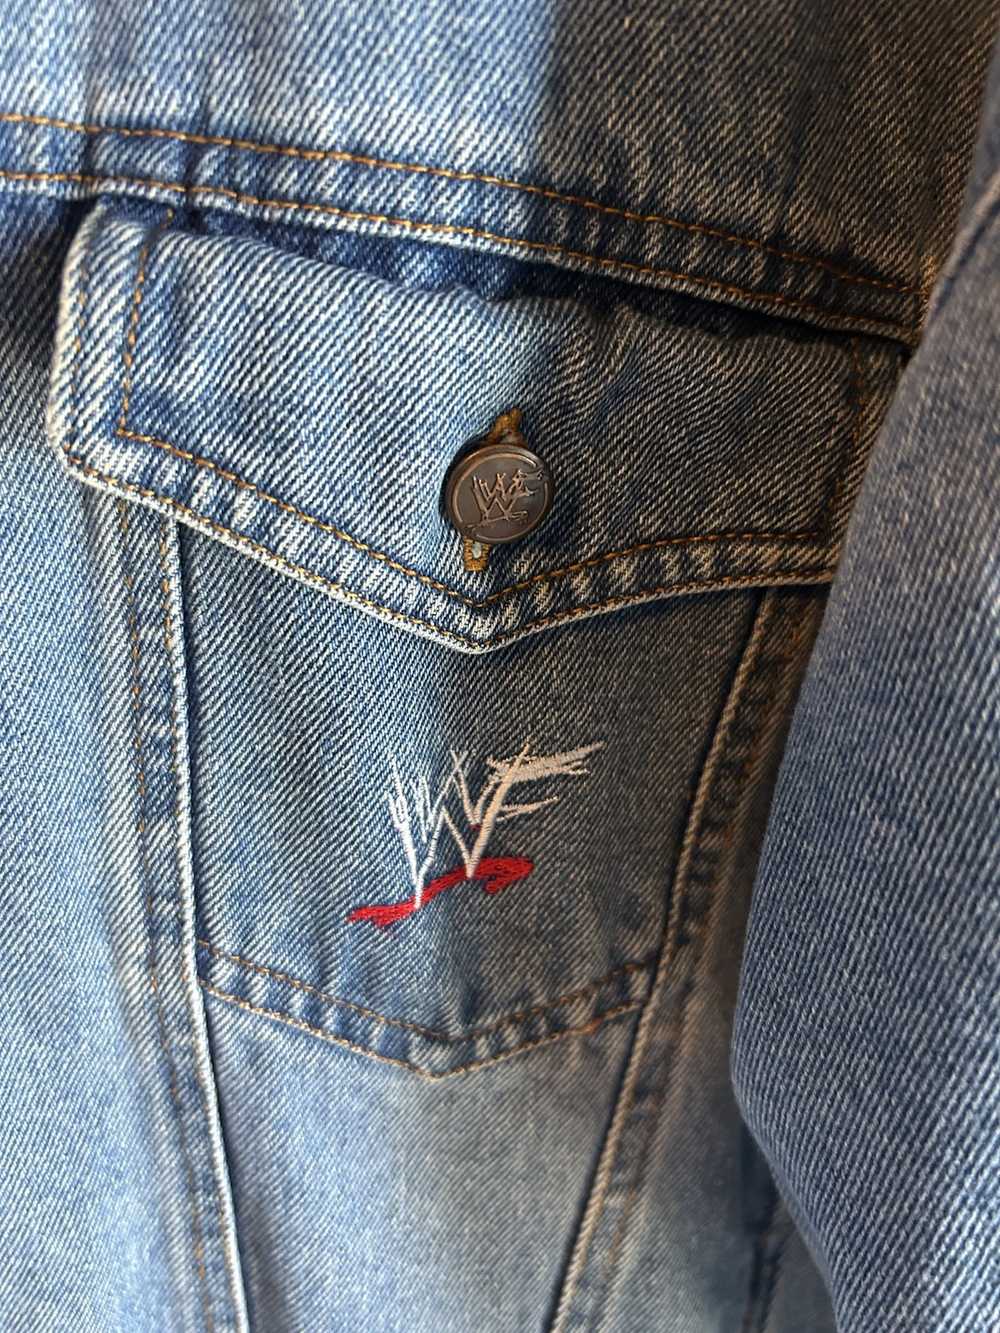 Wwe Stone cold Steve Austin WWF era Jean jacket - image 4